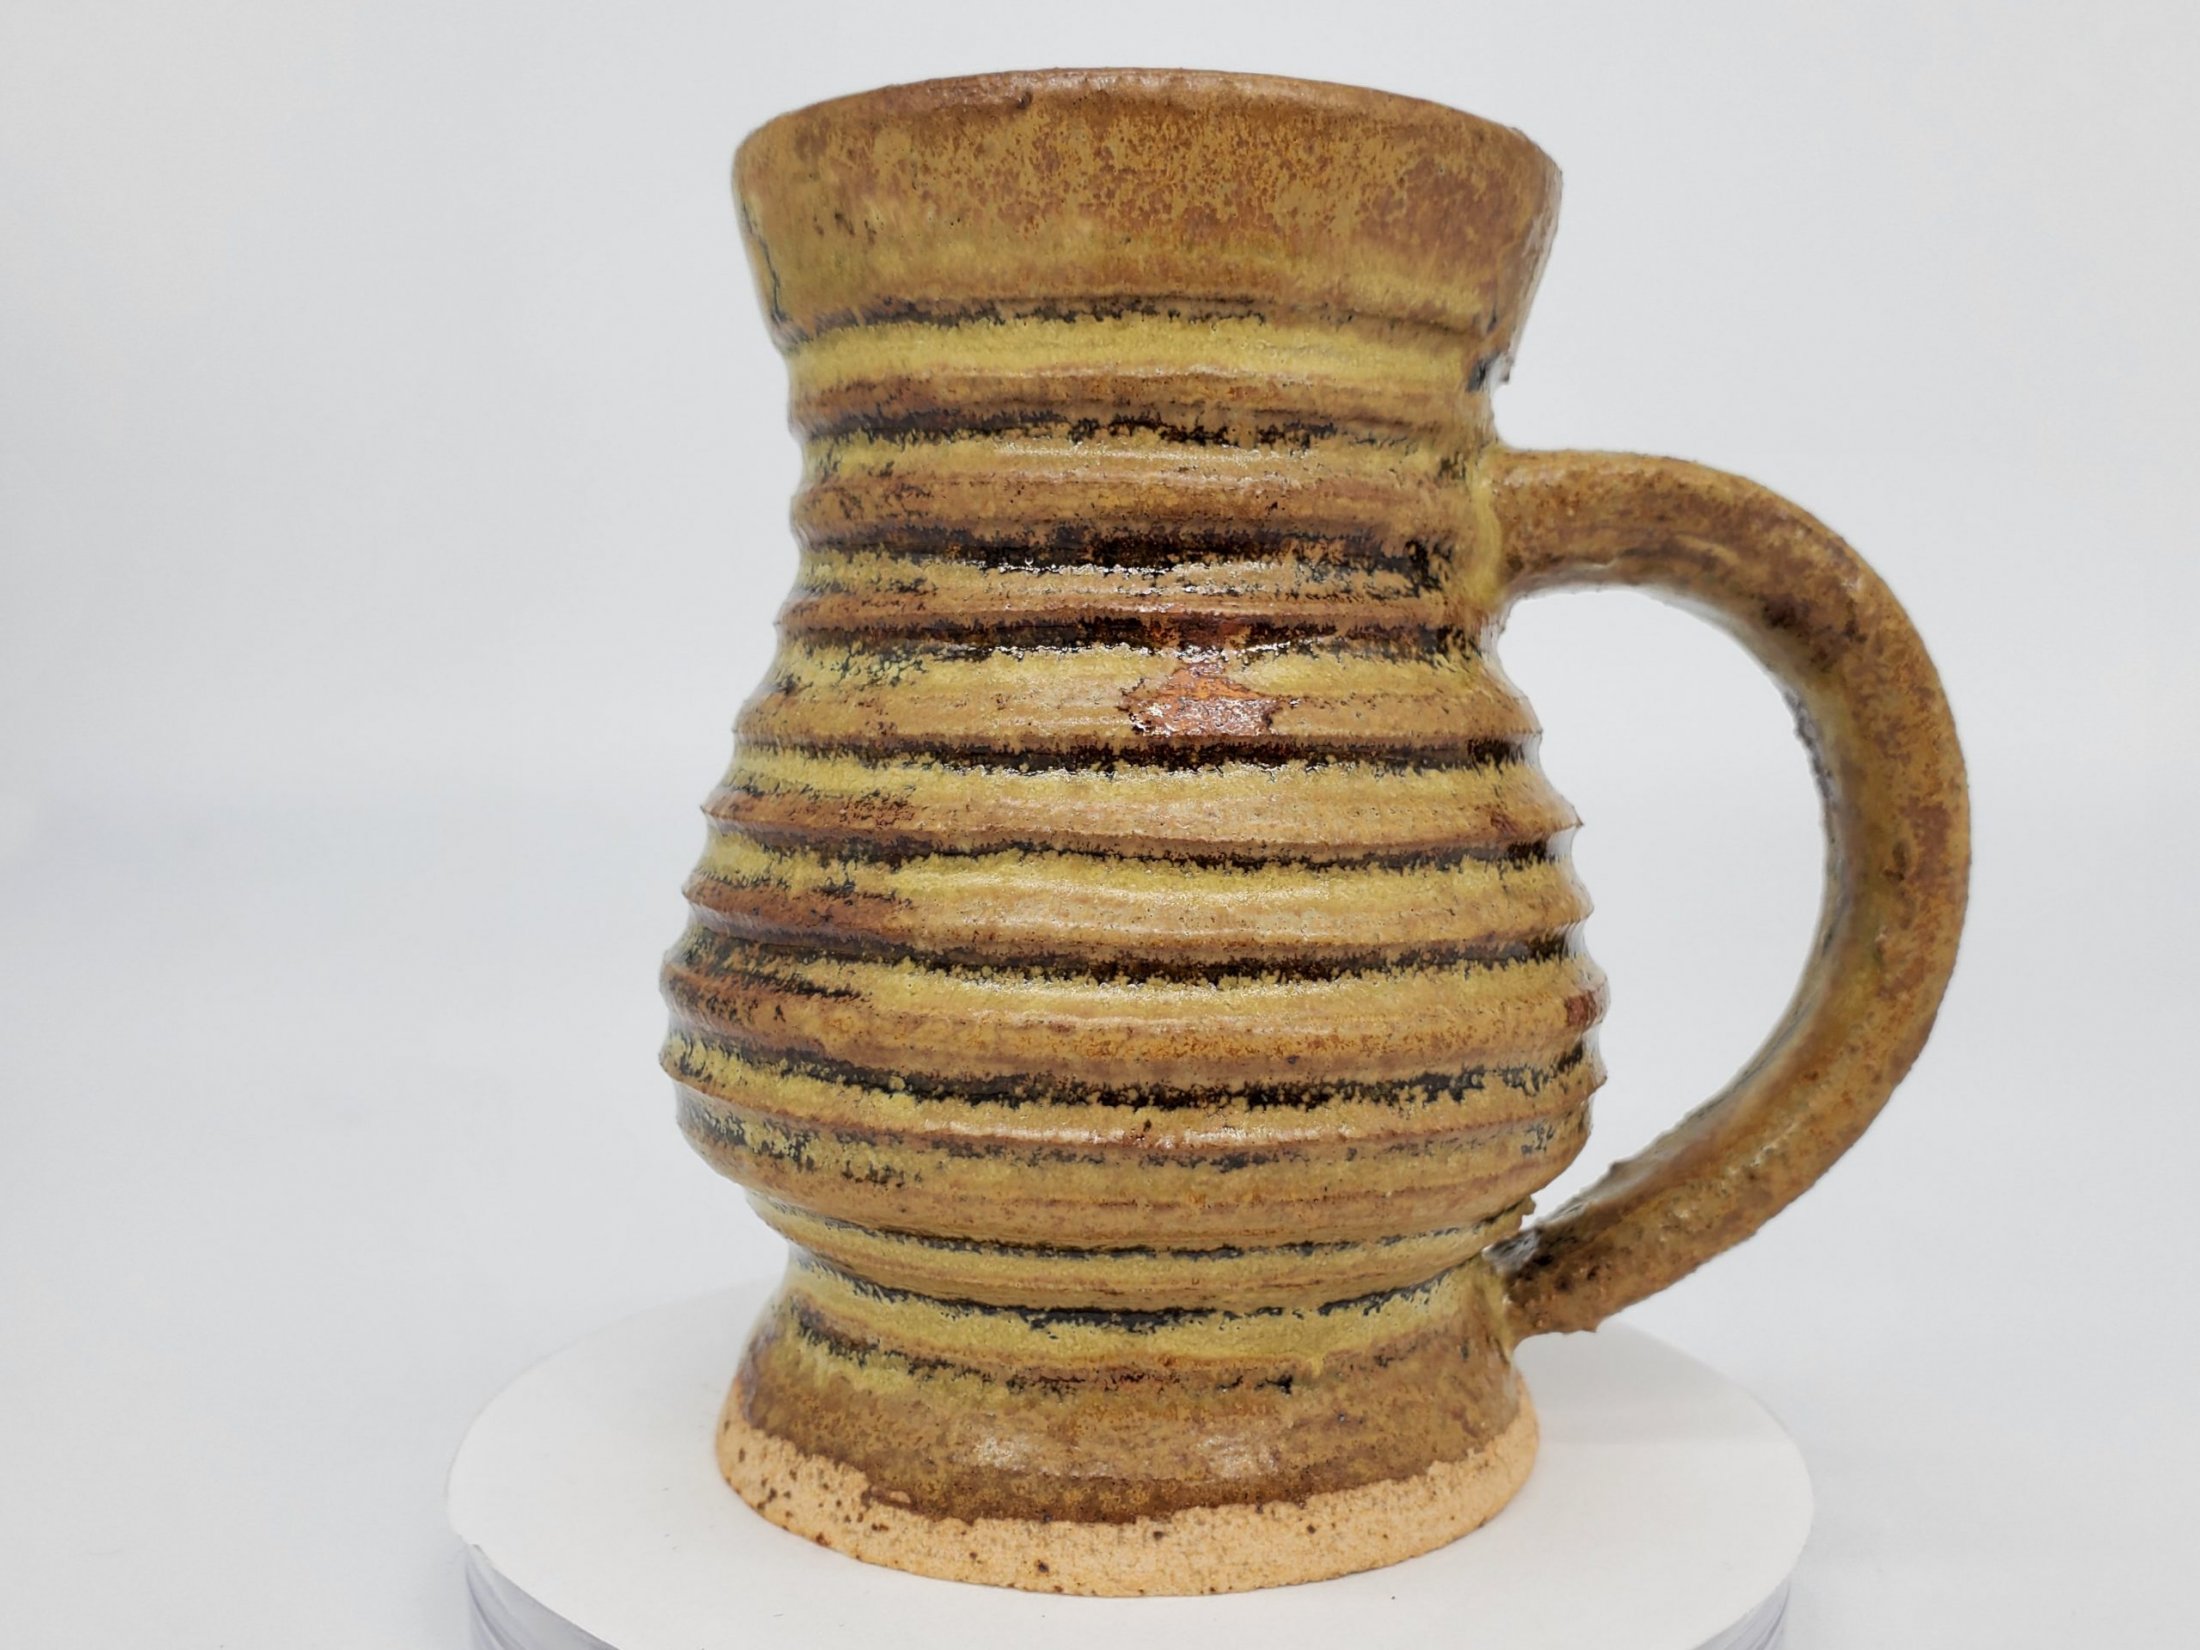 Functional Thrown Small Curvy Rustic Mug With Tortoise Shell Glaze